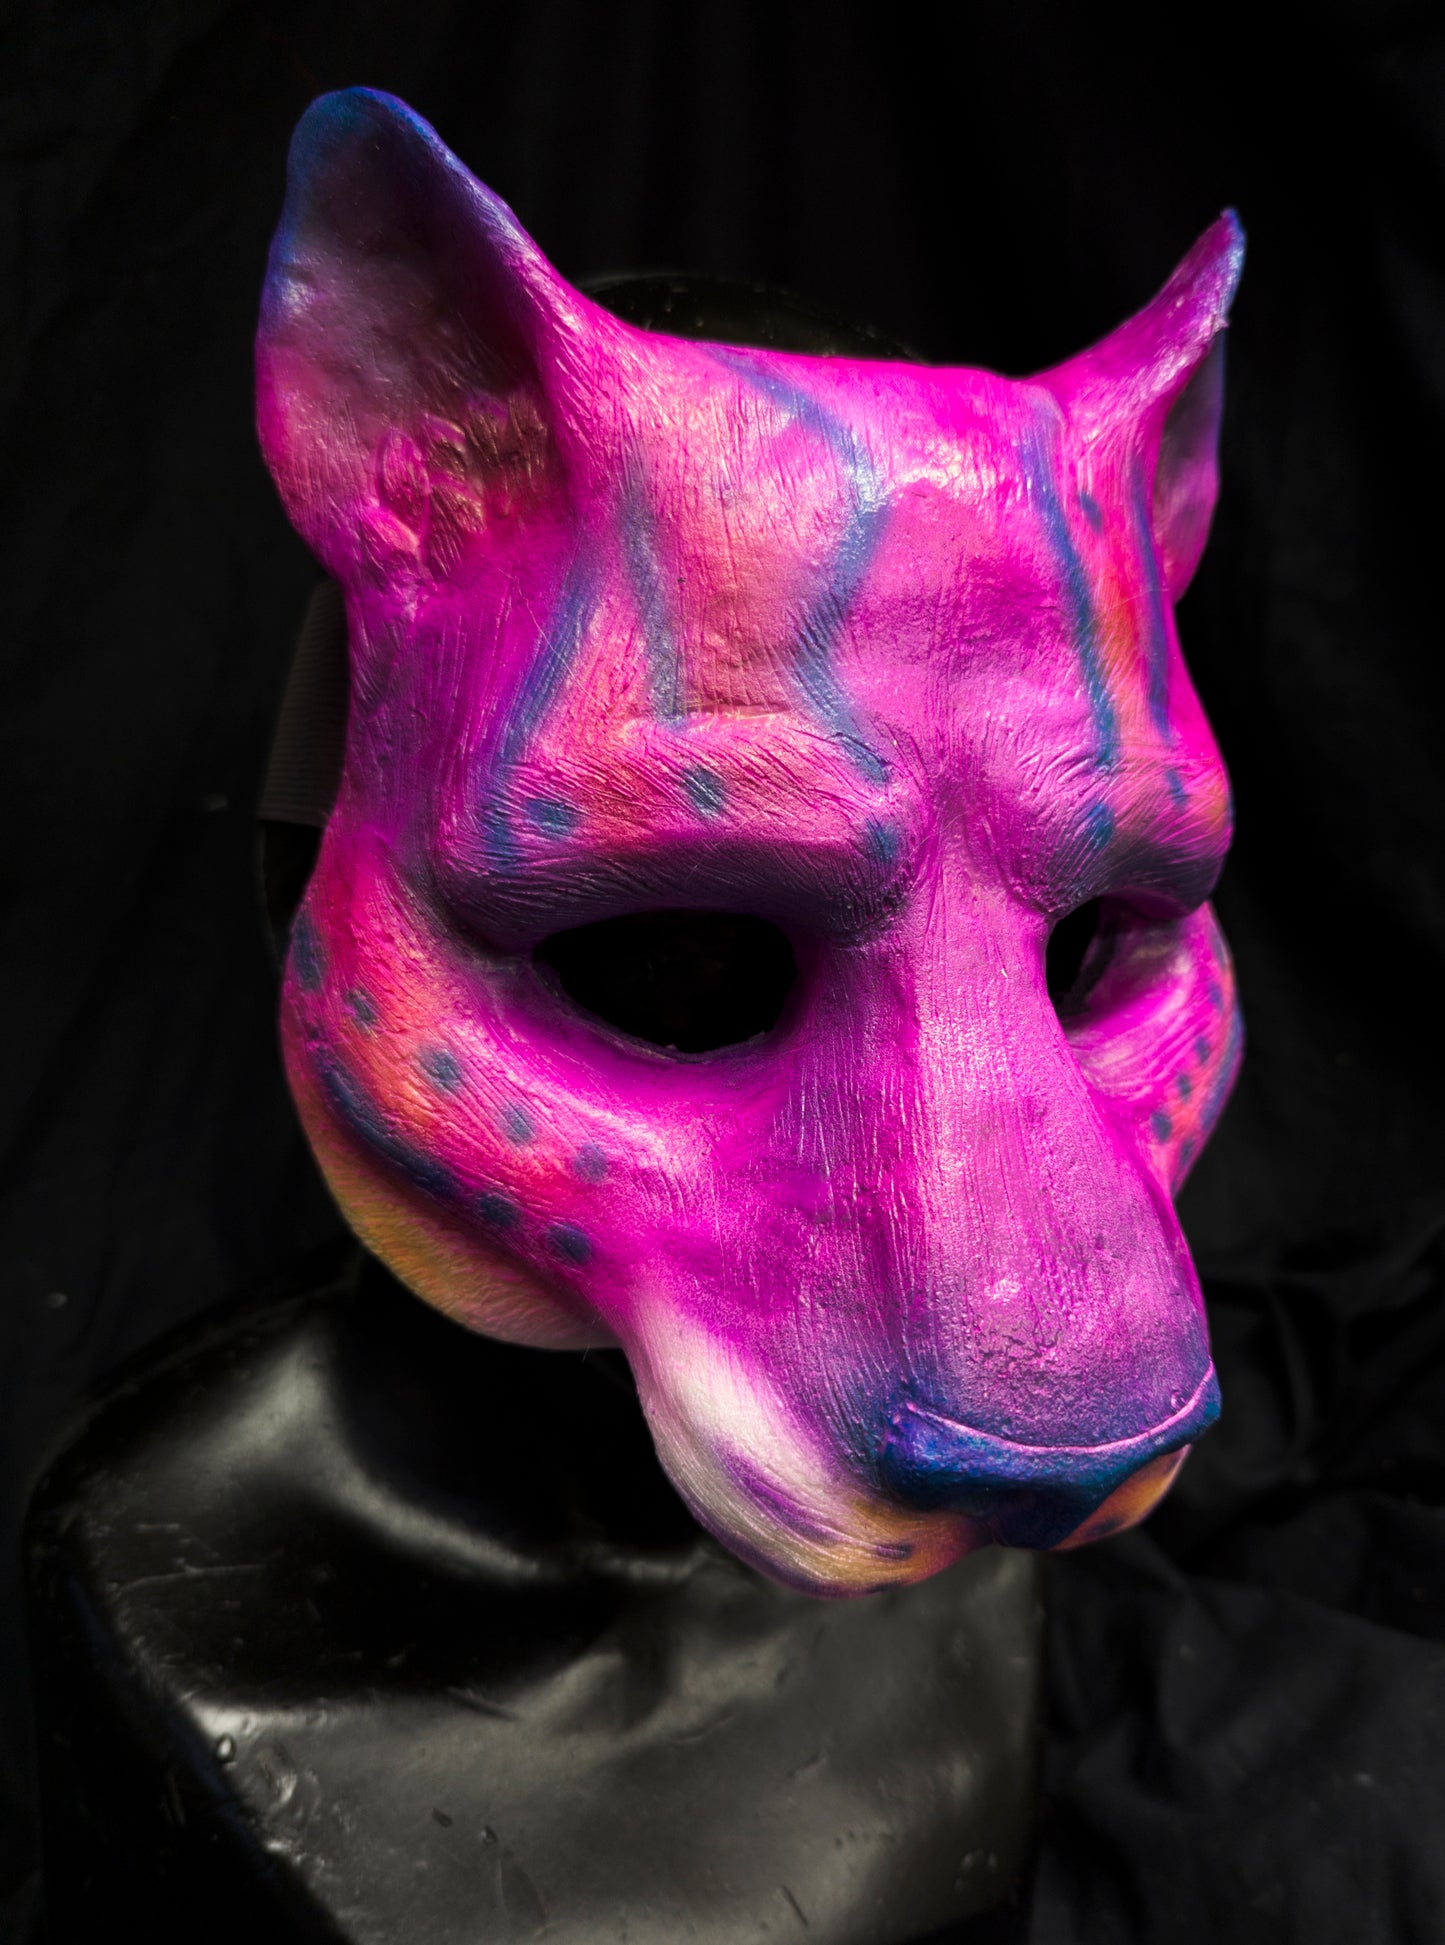 Custom painted LARP mask